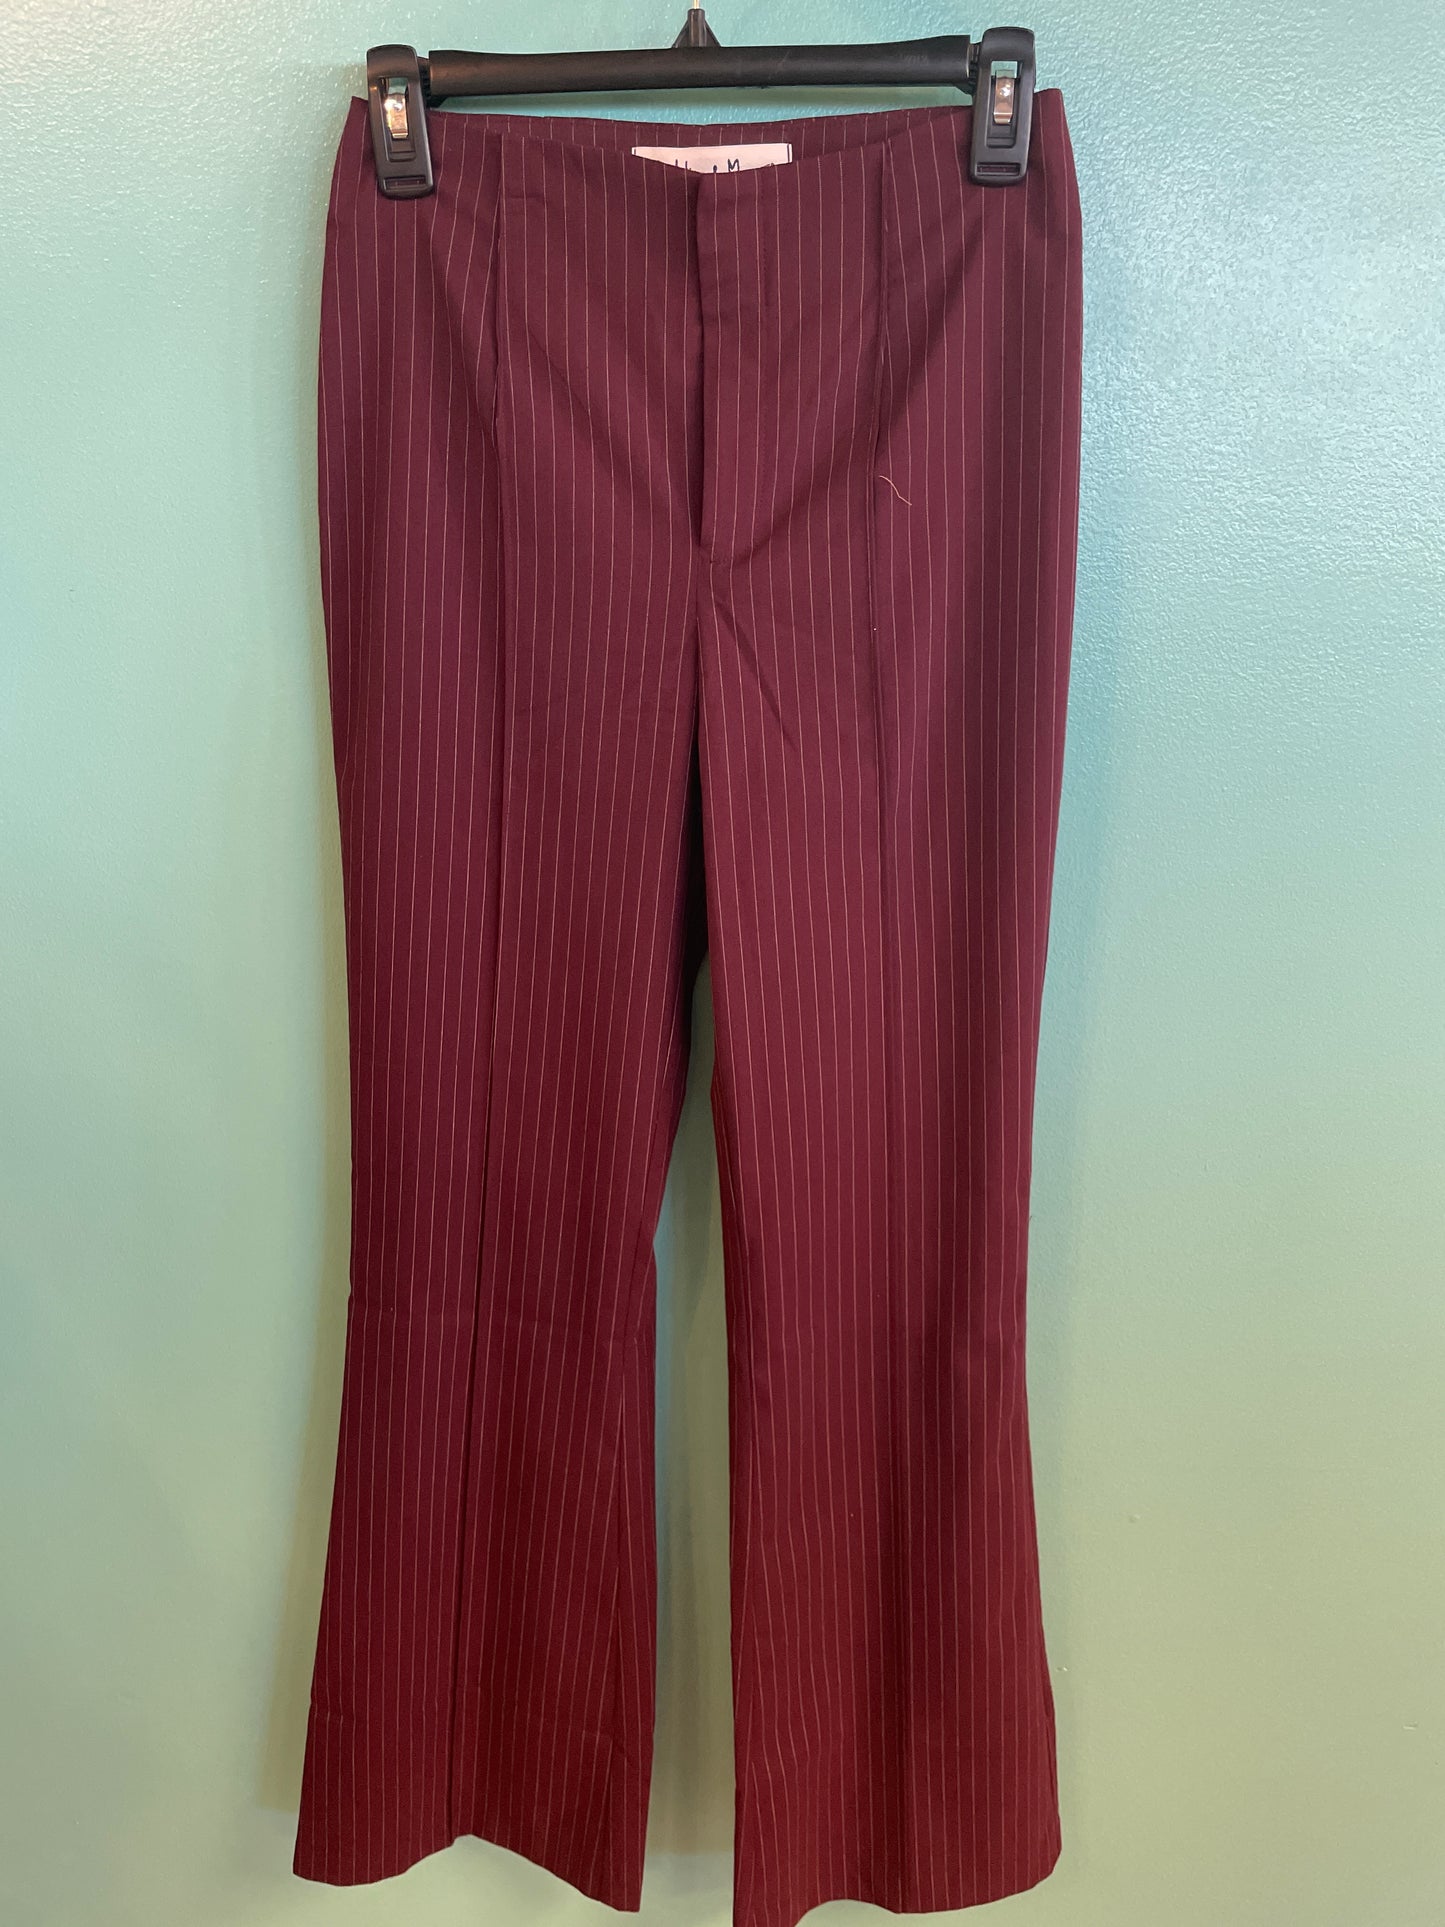 Burgundy Stripe Dress Pants